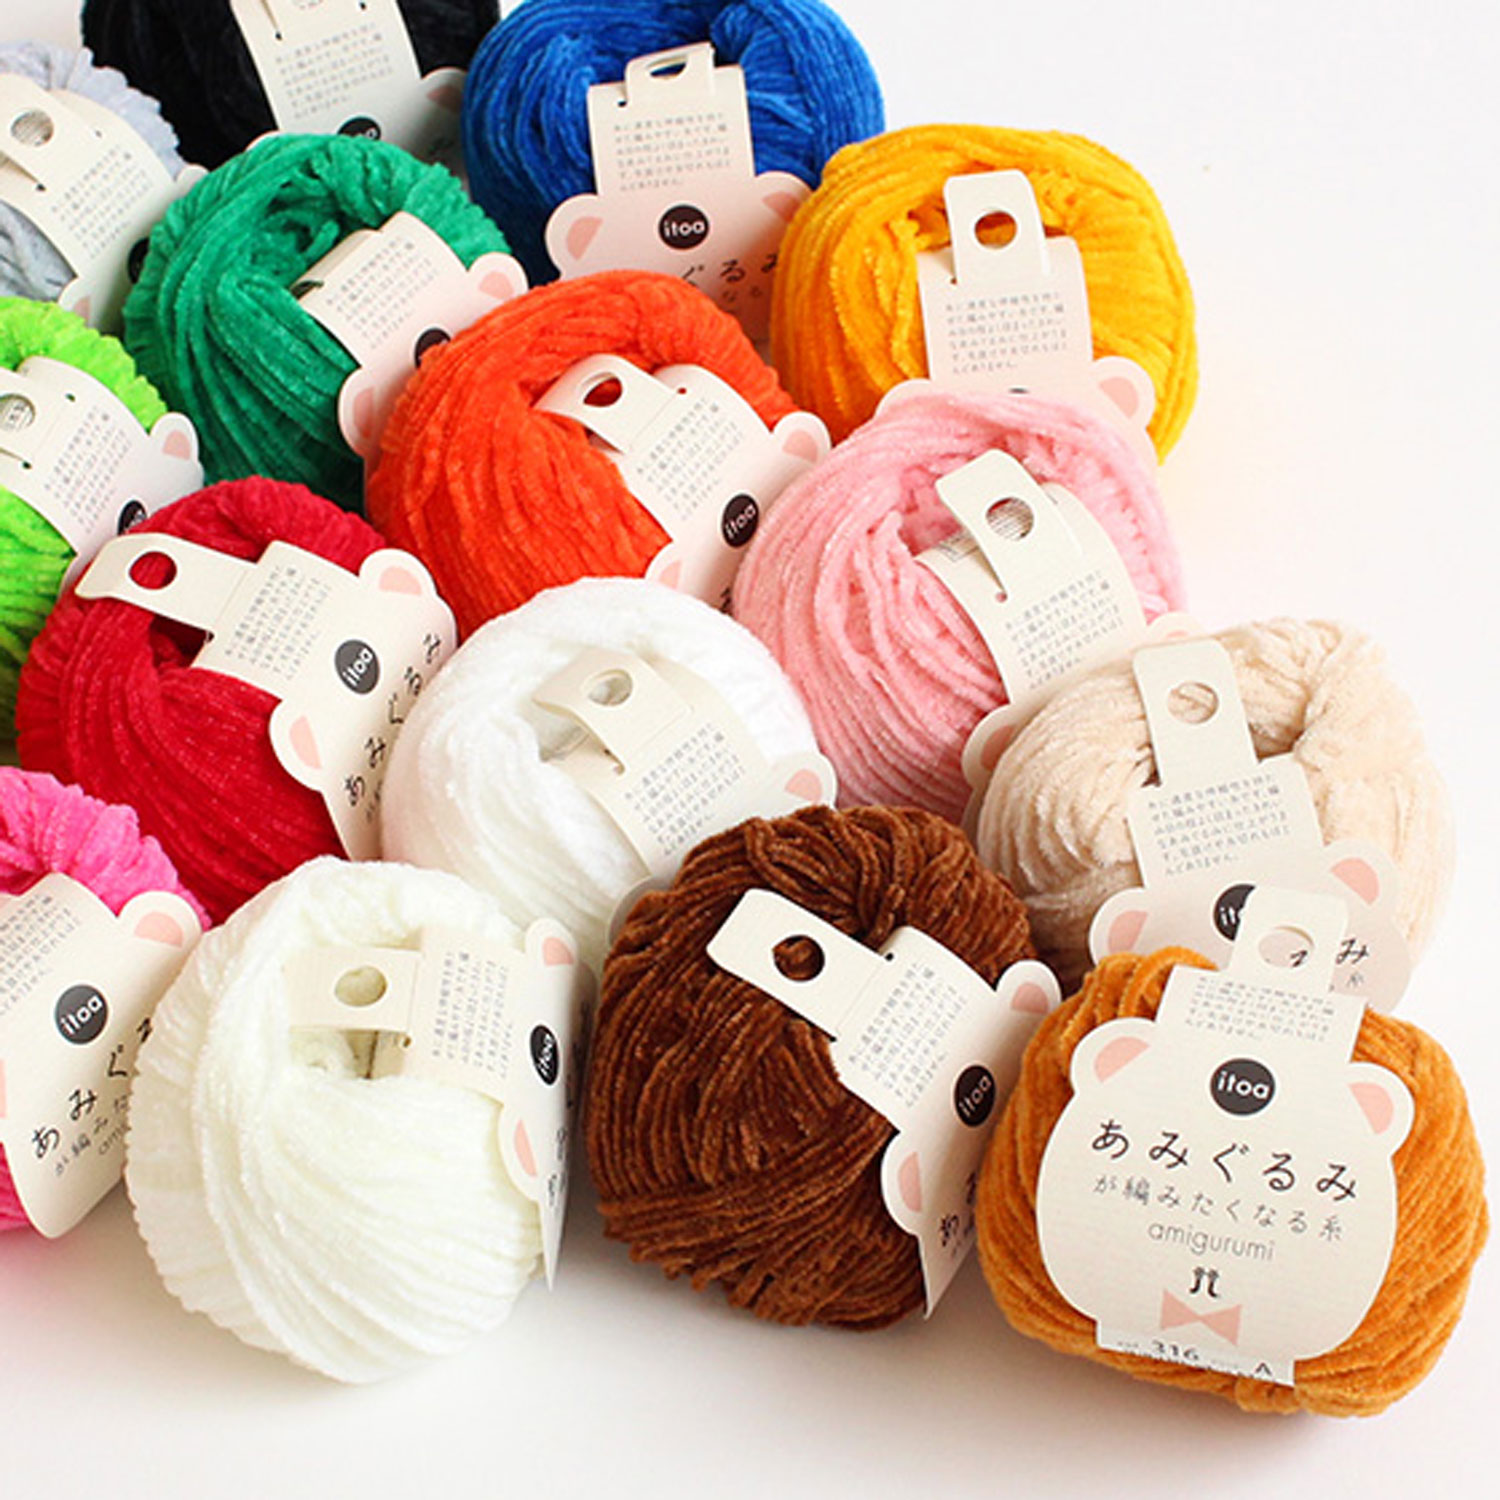 H2529 itoa "Yarn that makes you want to knit amigurumi" 5balls (pack)